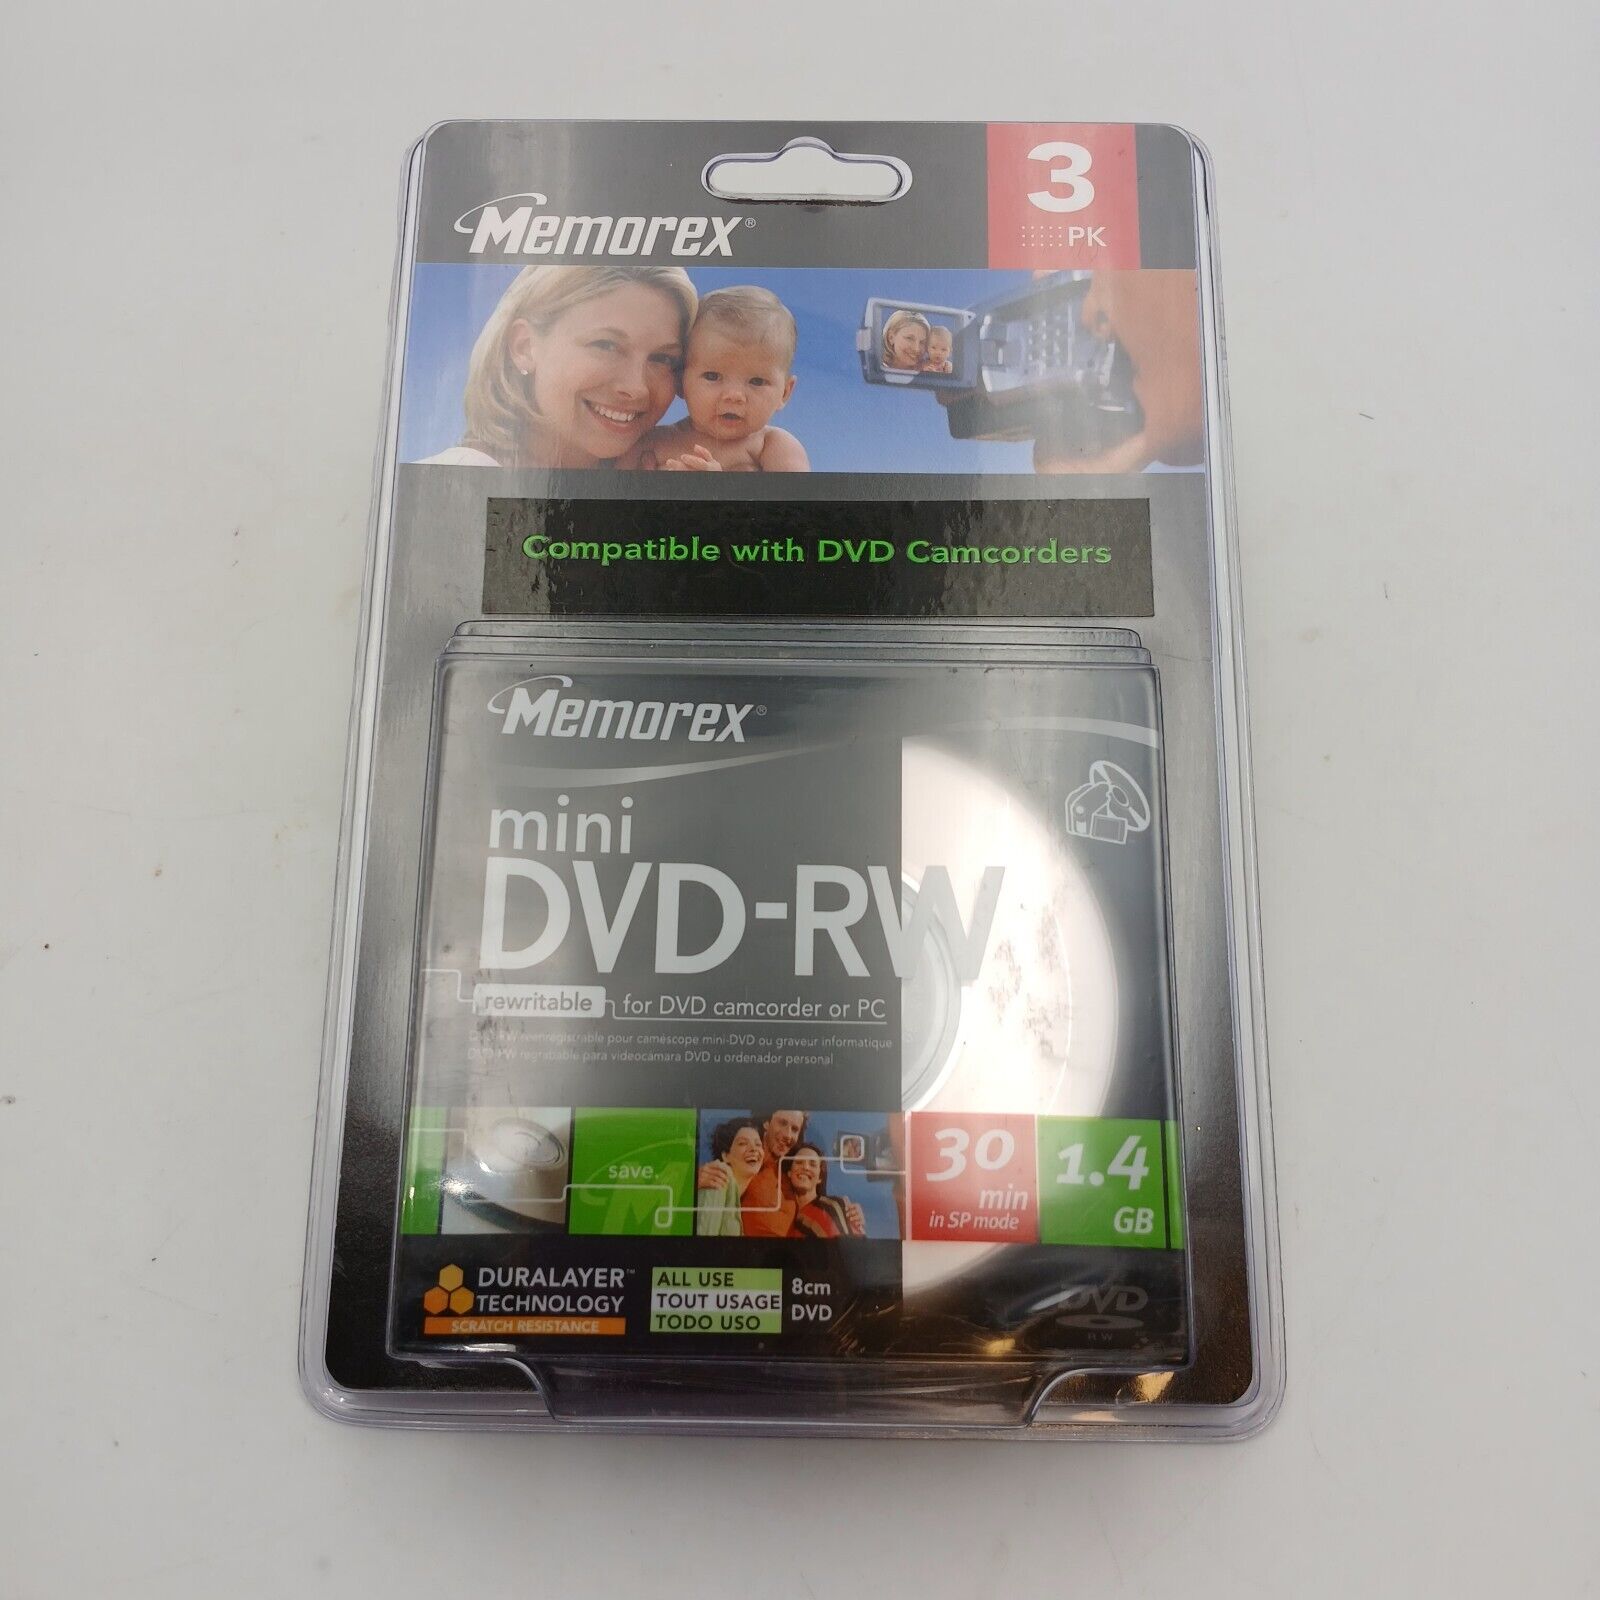 Memorex Mini DVD-RW Pack 3  1.4GB, 30 min For DVD Camcorders